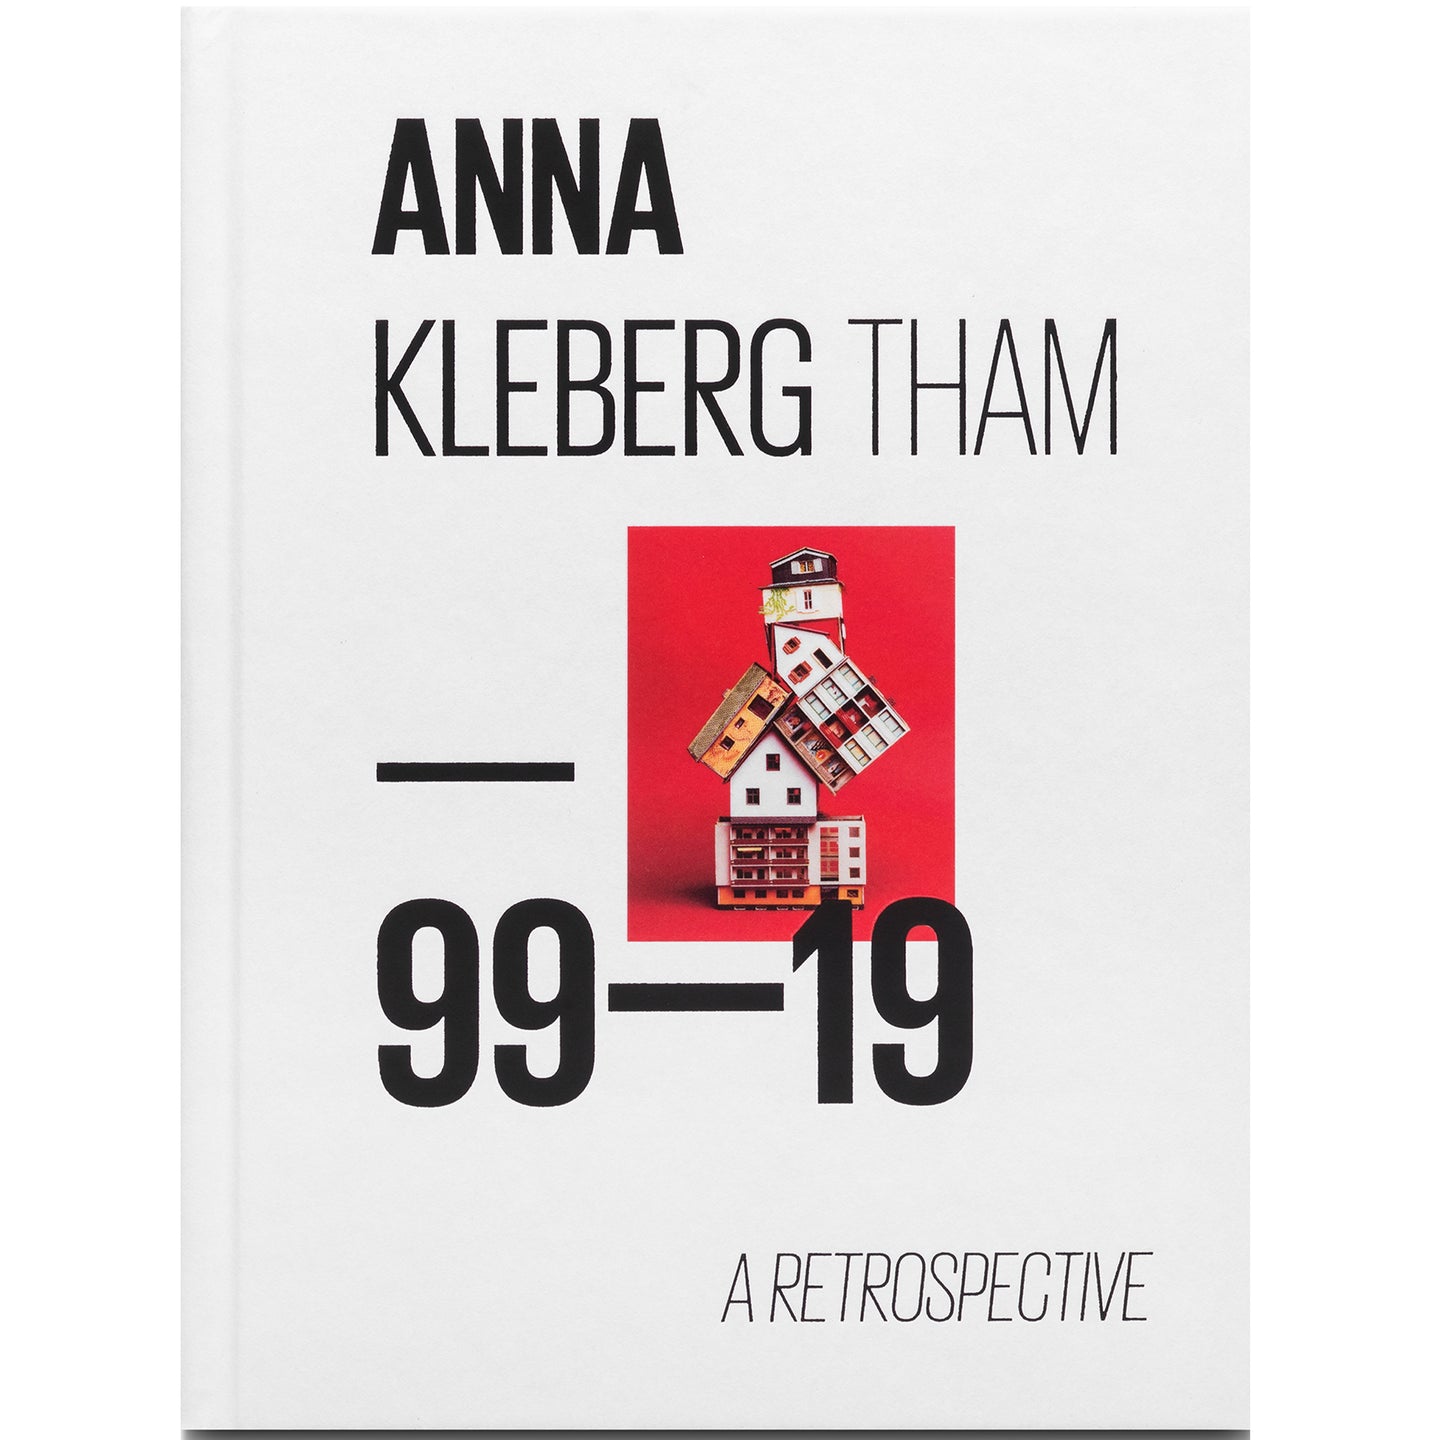 ANNA KLEBERG THAM: 99-19 A RETROSPECTIVE